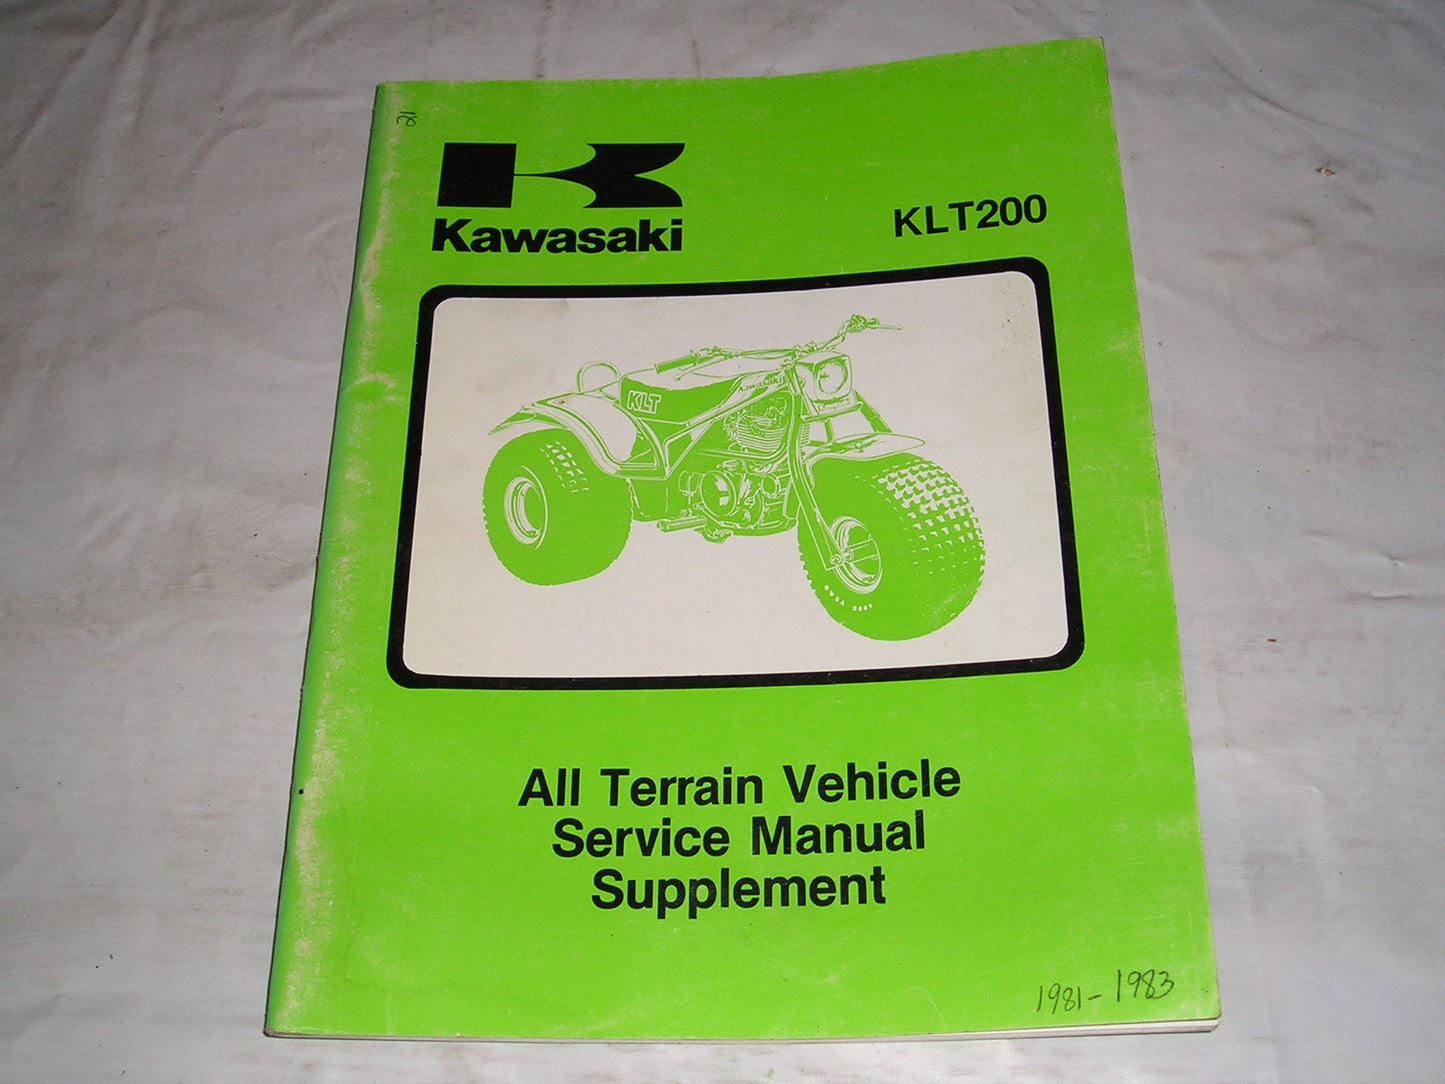 KAWASAKI KLT200 A2 A3 A4 A4A 1981-1983 All Terrain Service Supplement Manual  99963-0037-22  #21